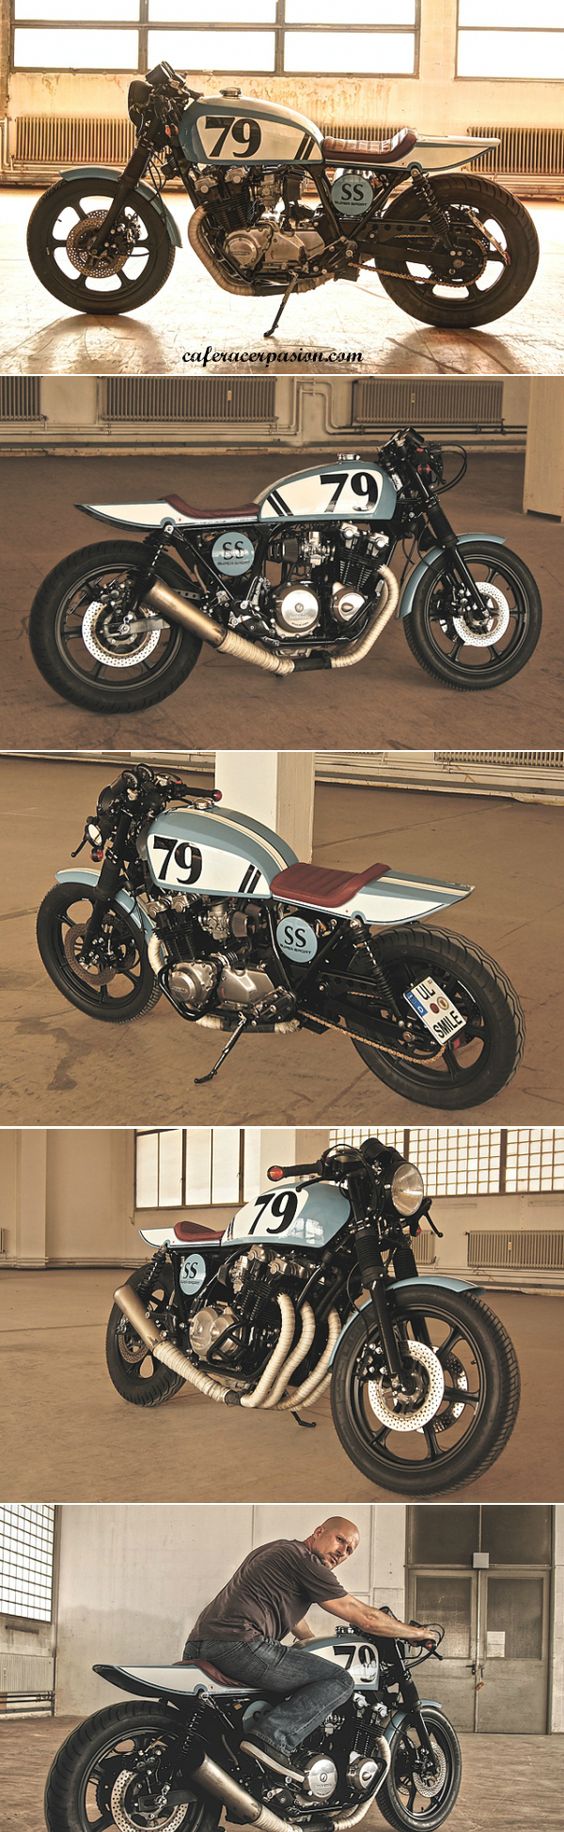 Honda cb900f bol dor cafe racer by Andrea Goldemann #motorcycles #caferacer #motos |